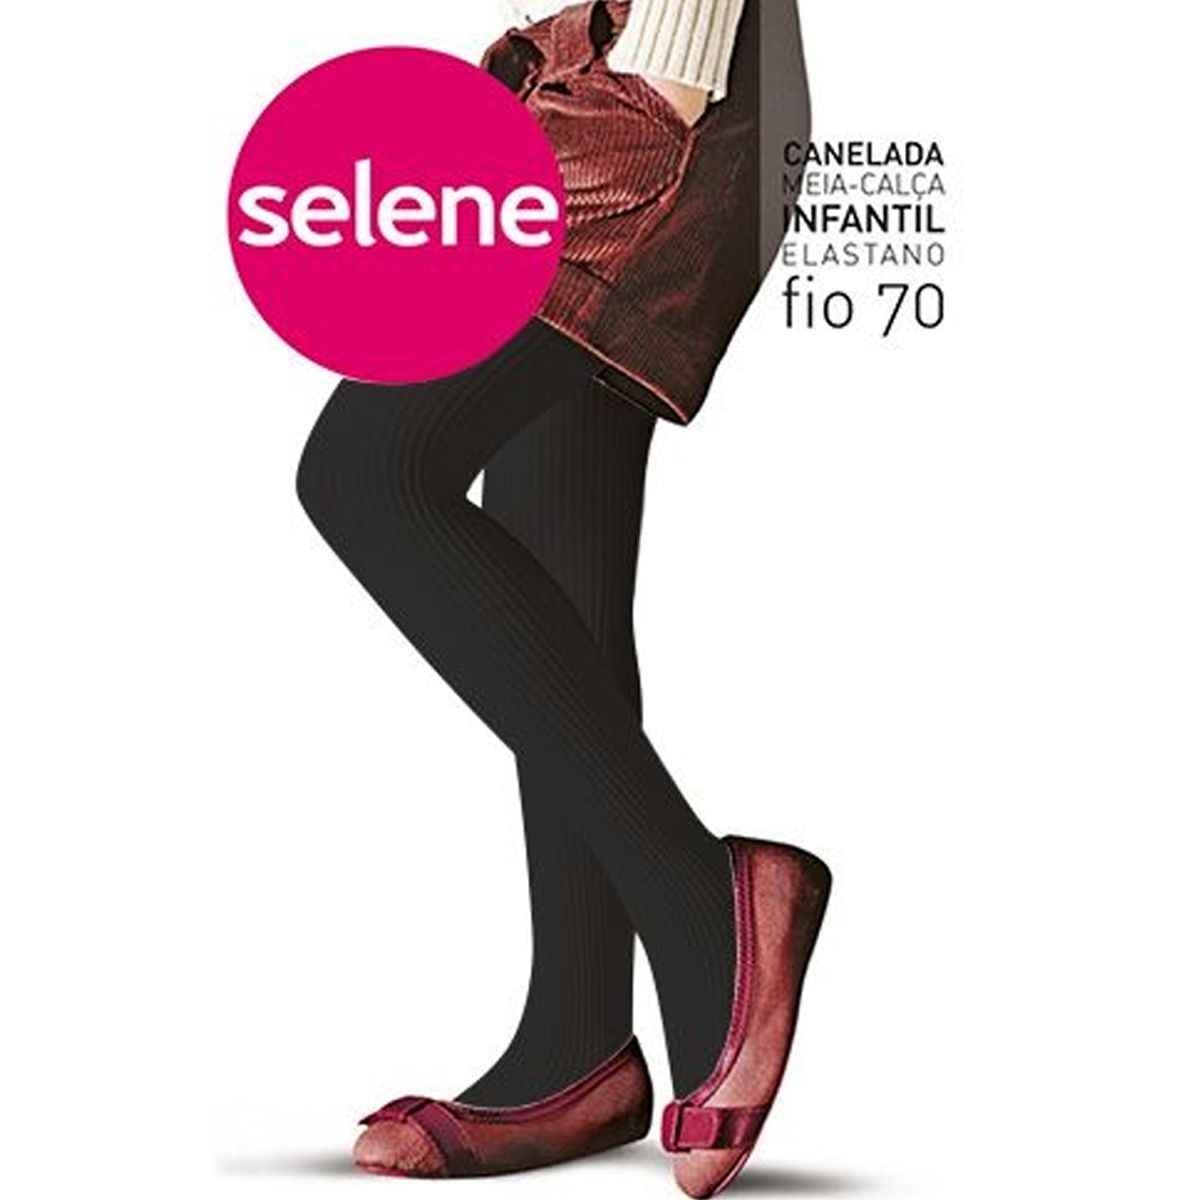 Meia calça infantil fio 70 Selene